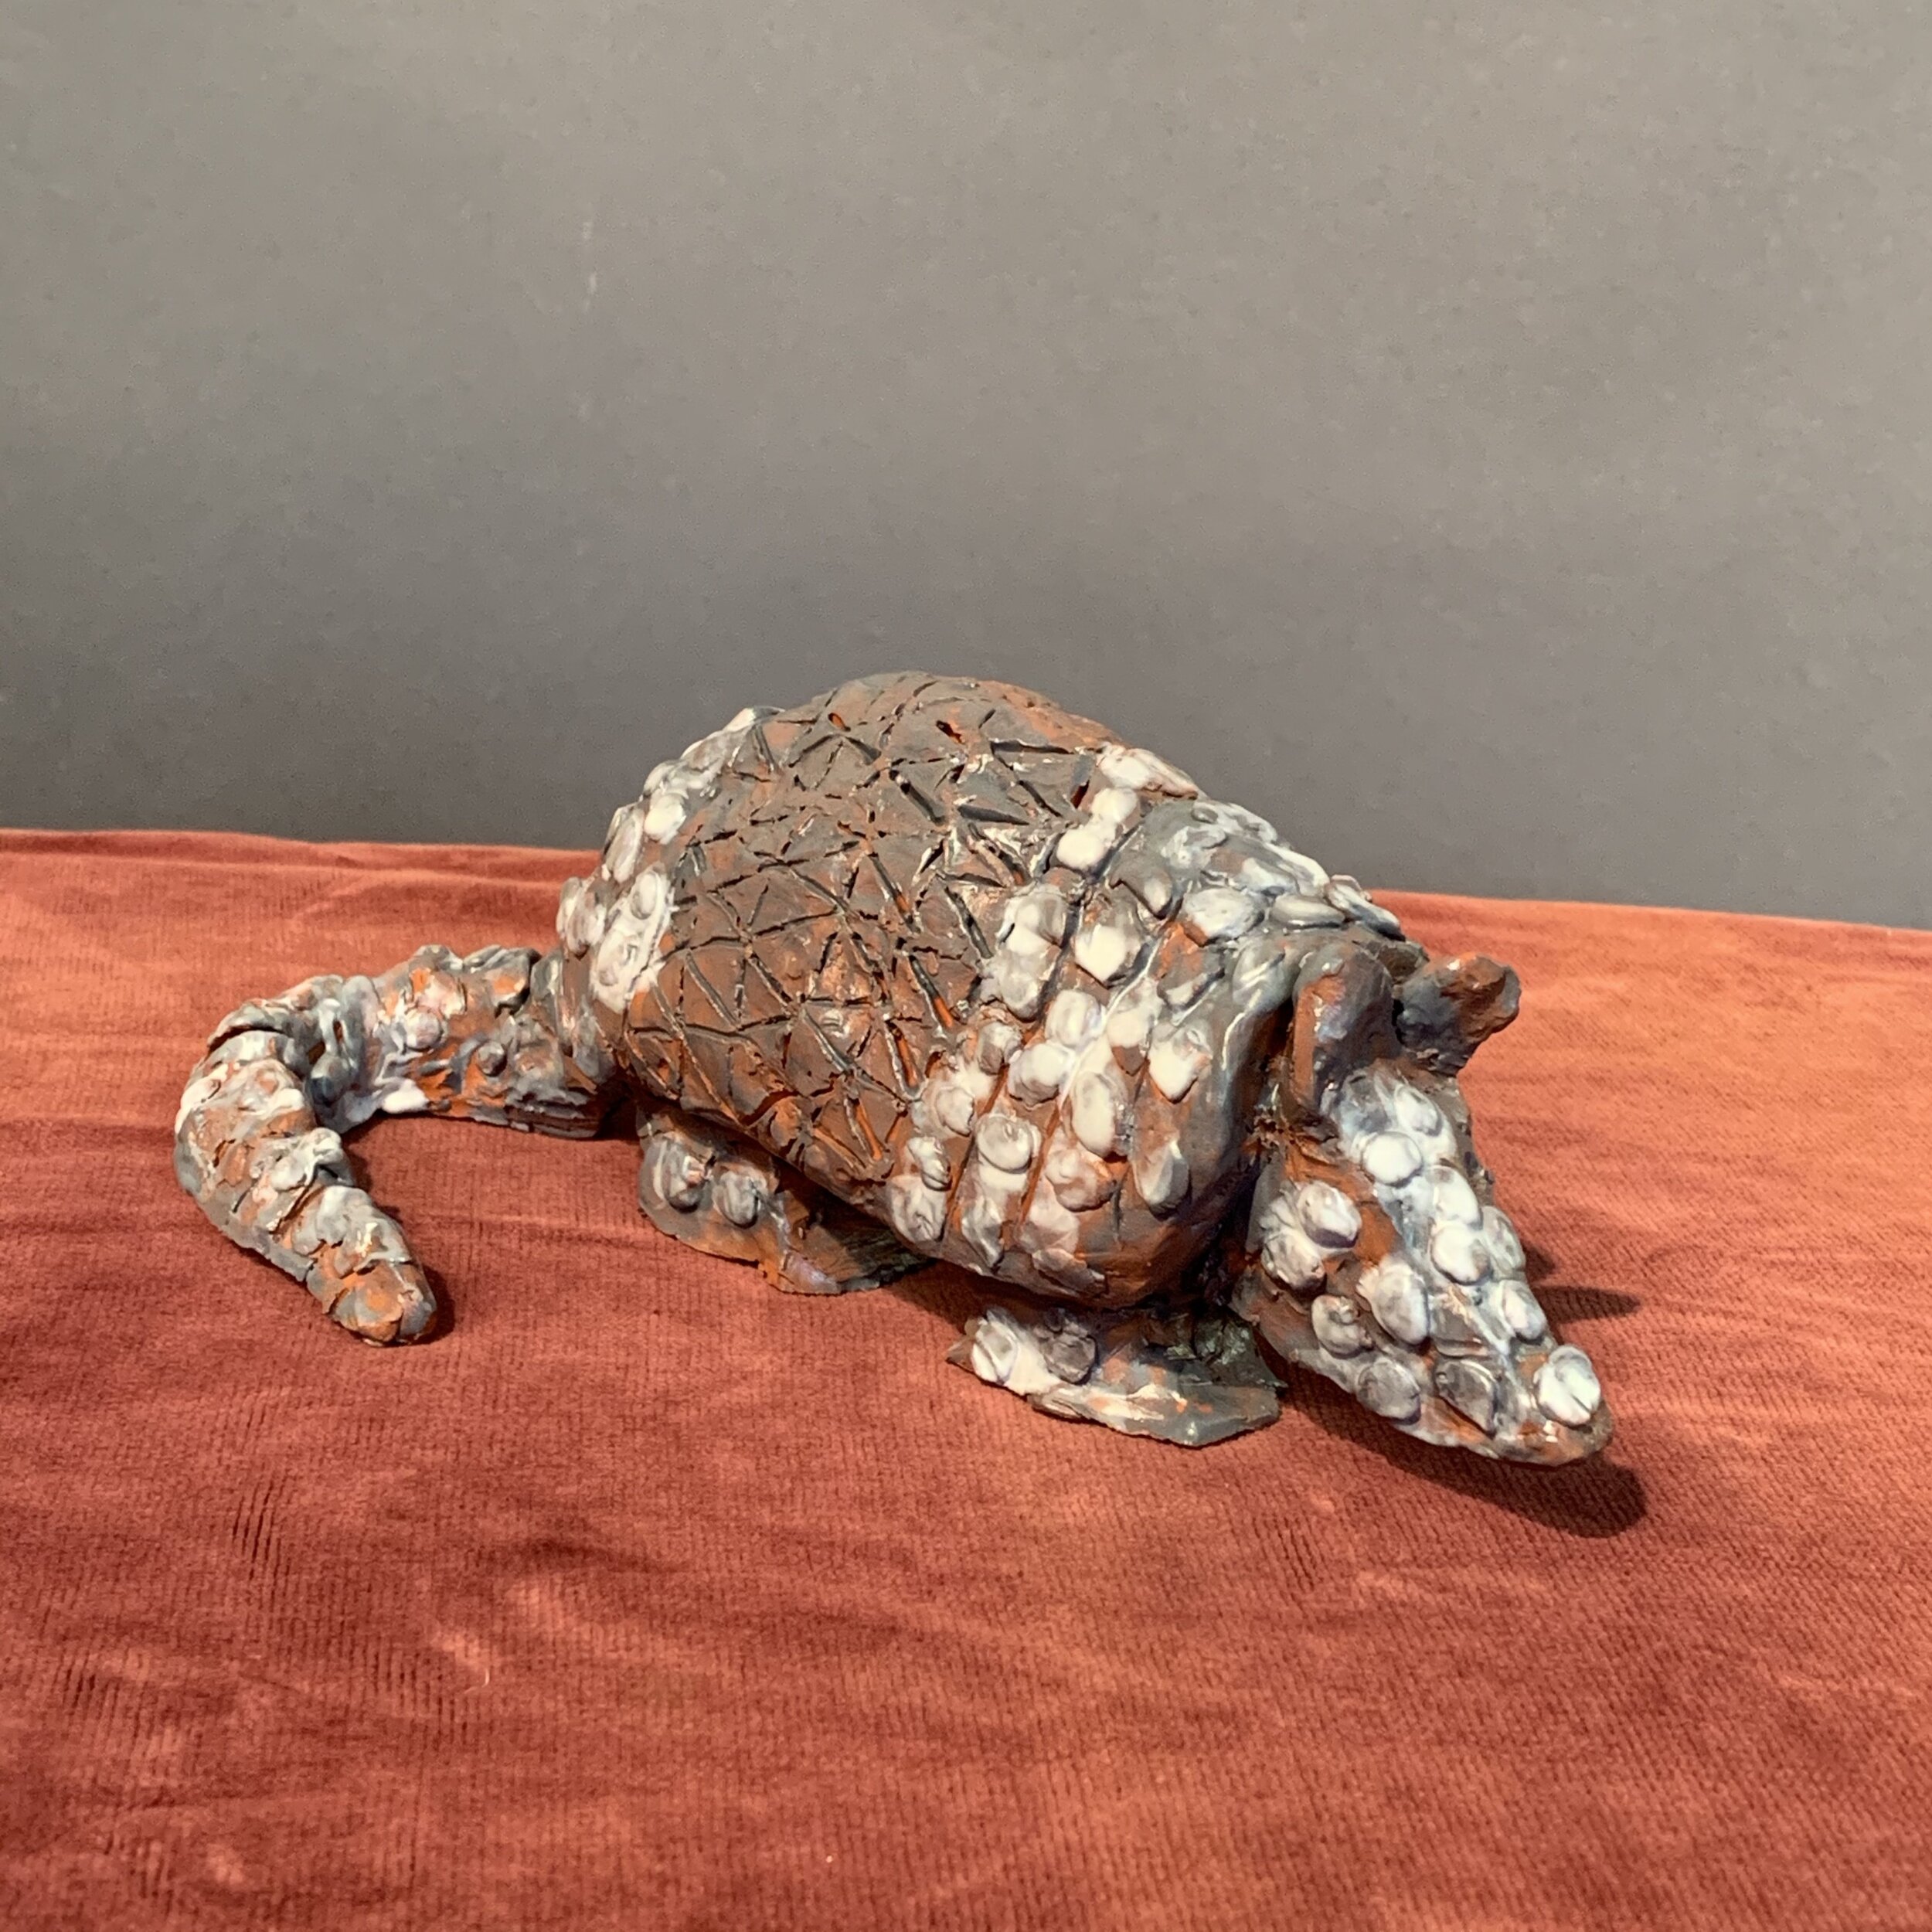   Armadillo :Sprit Animal Series  Clay with glaze   3.5 x 9 x 4 in/ 8.8 x 22.8 x 10 cm 2020 